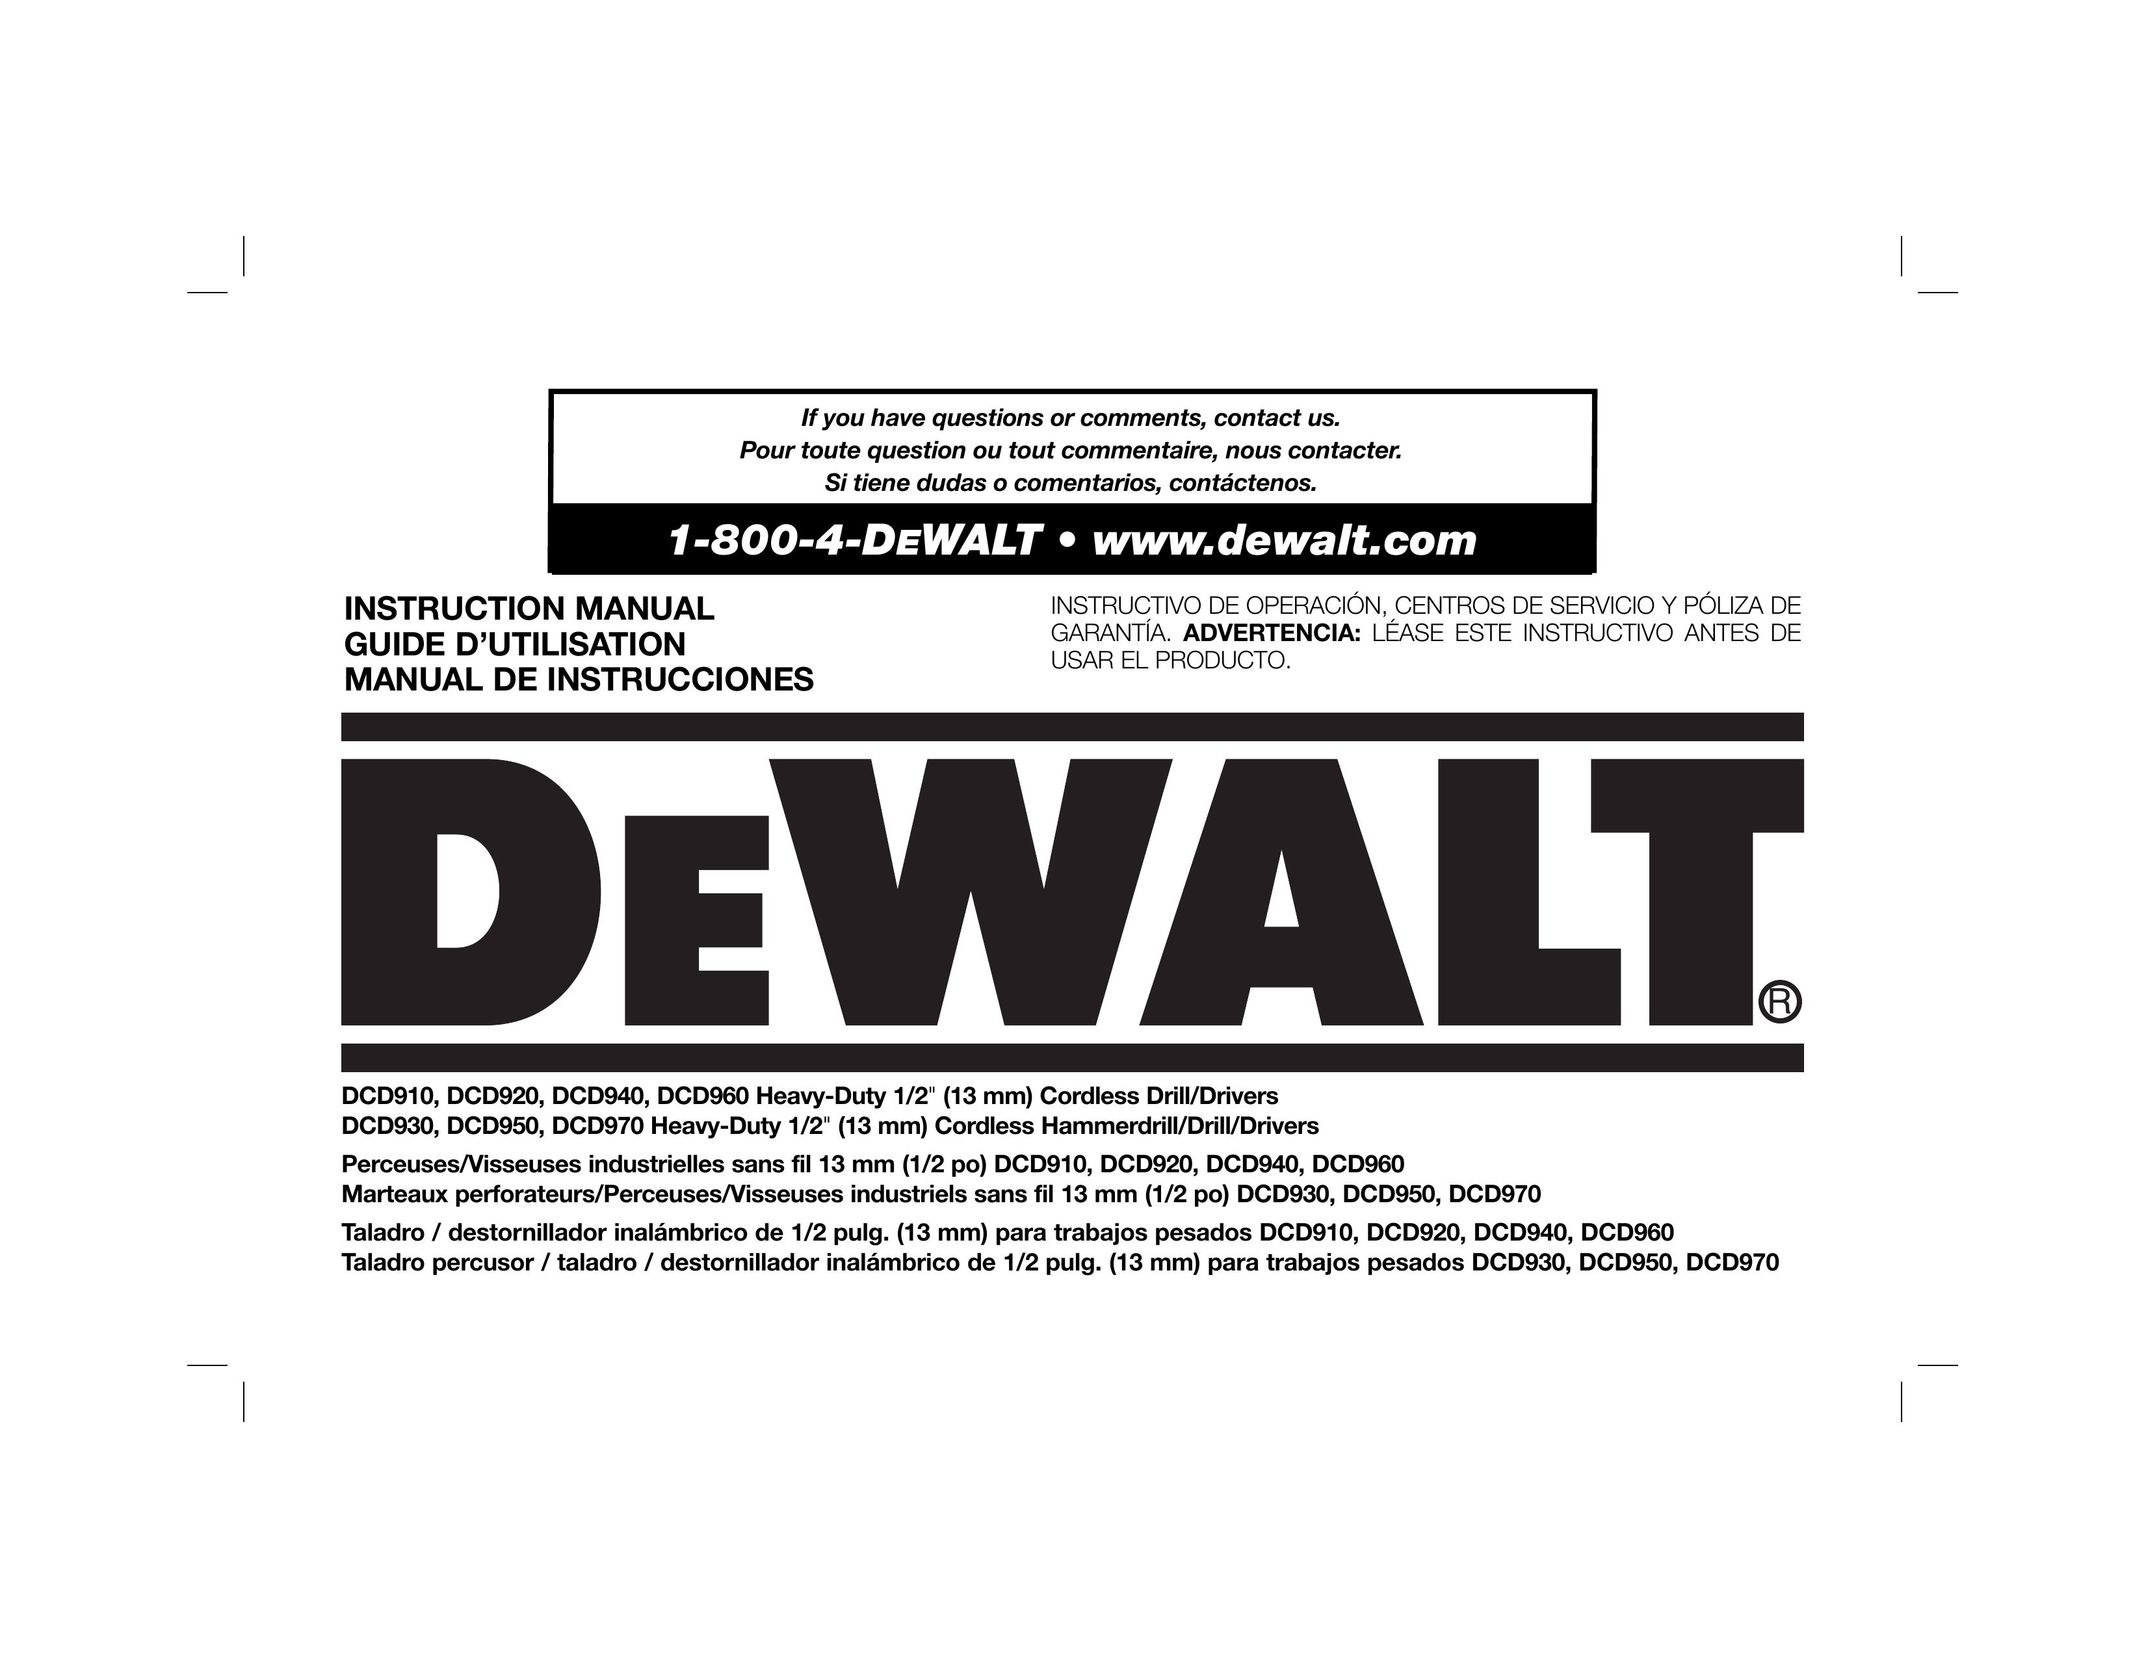 DeWalt DCD940 Cordless Drill User Manual